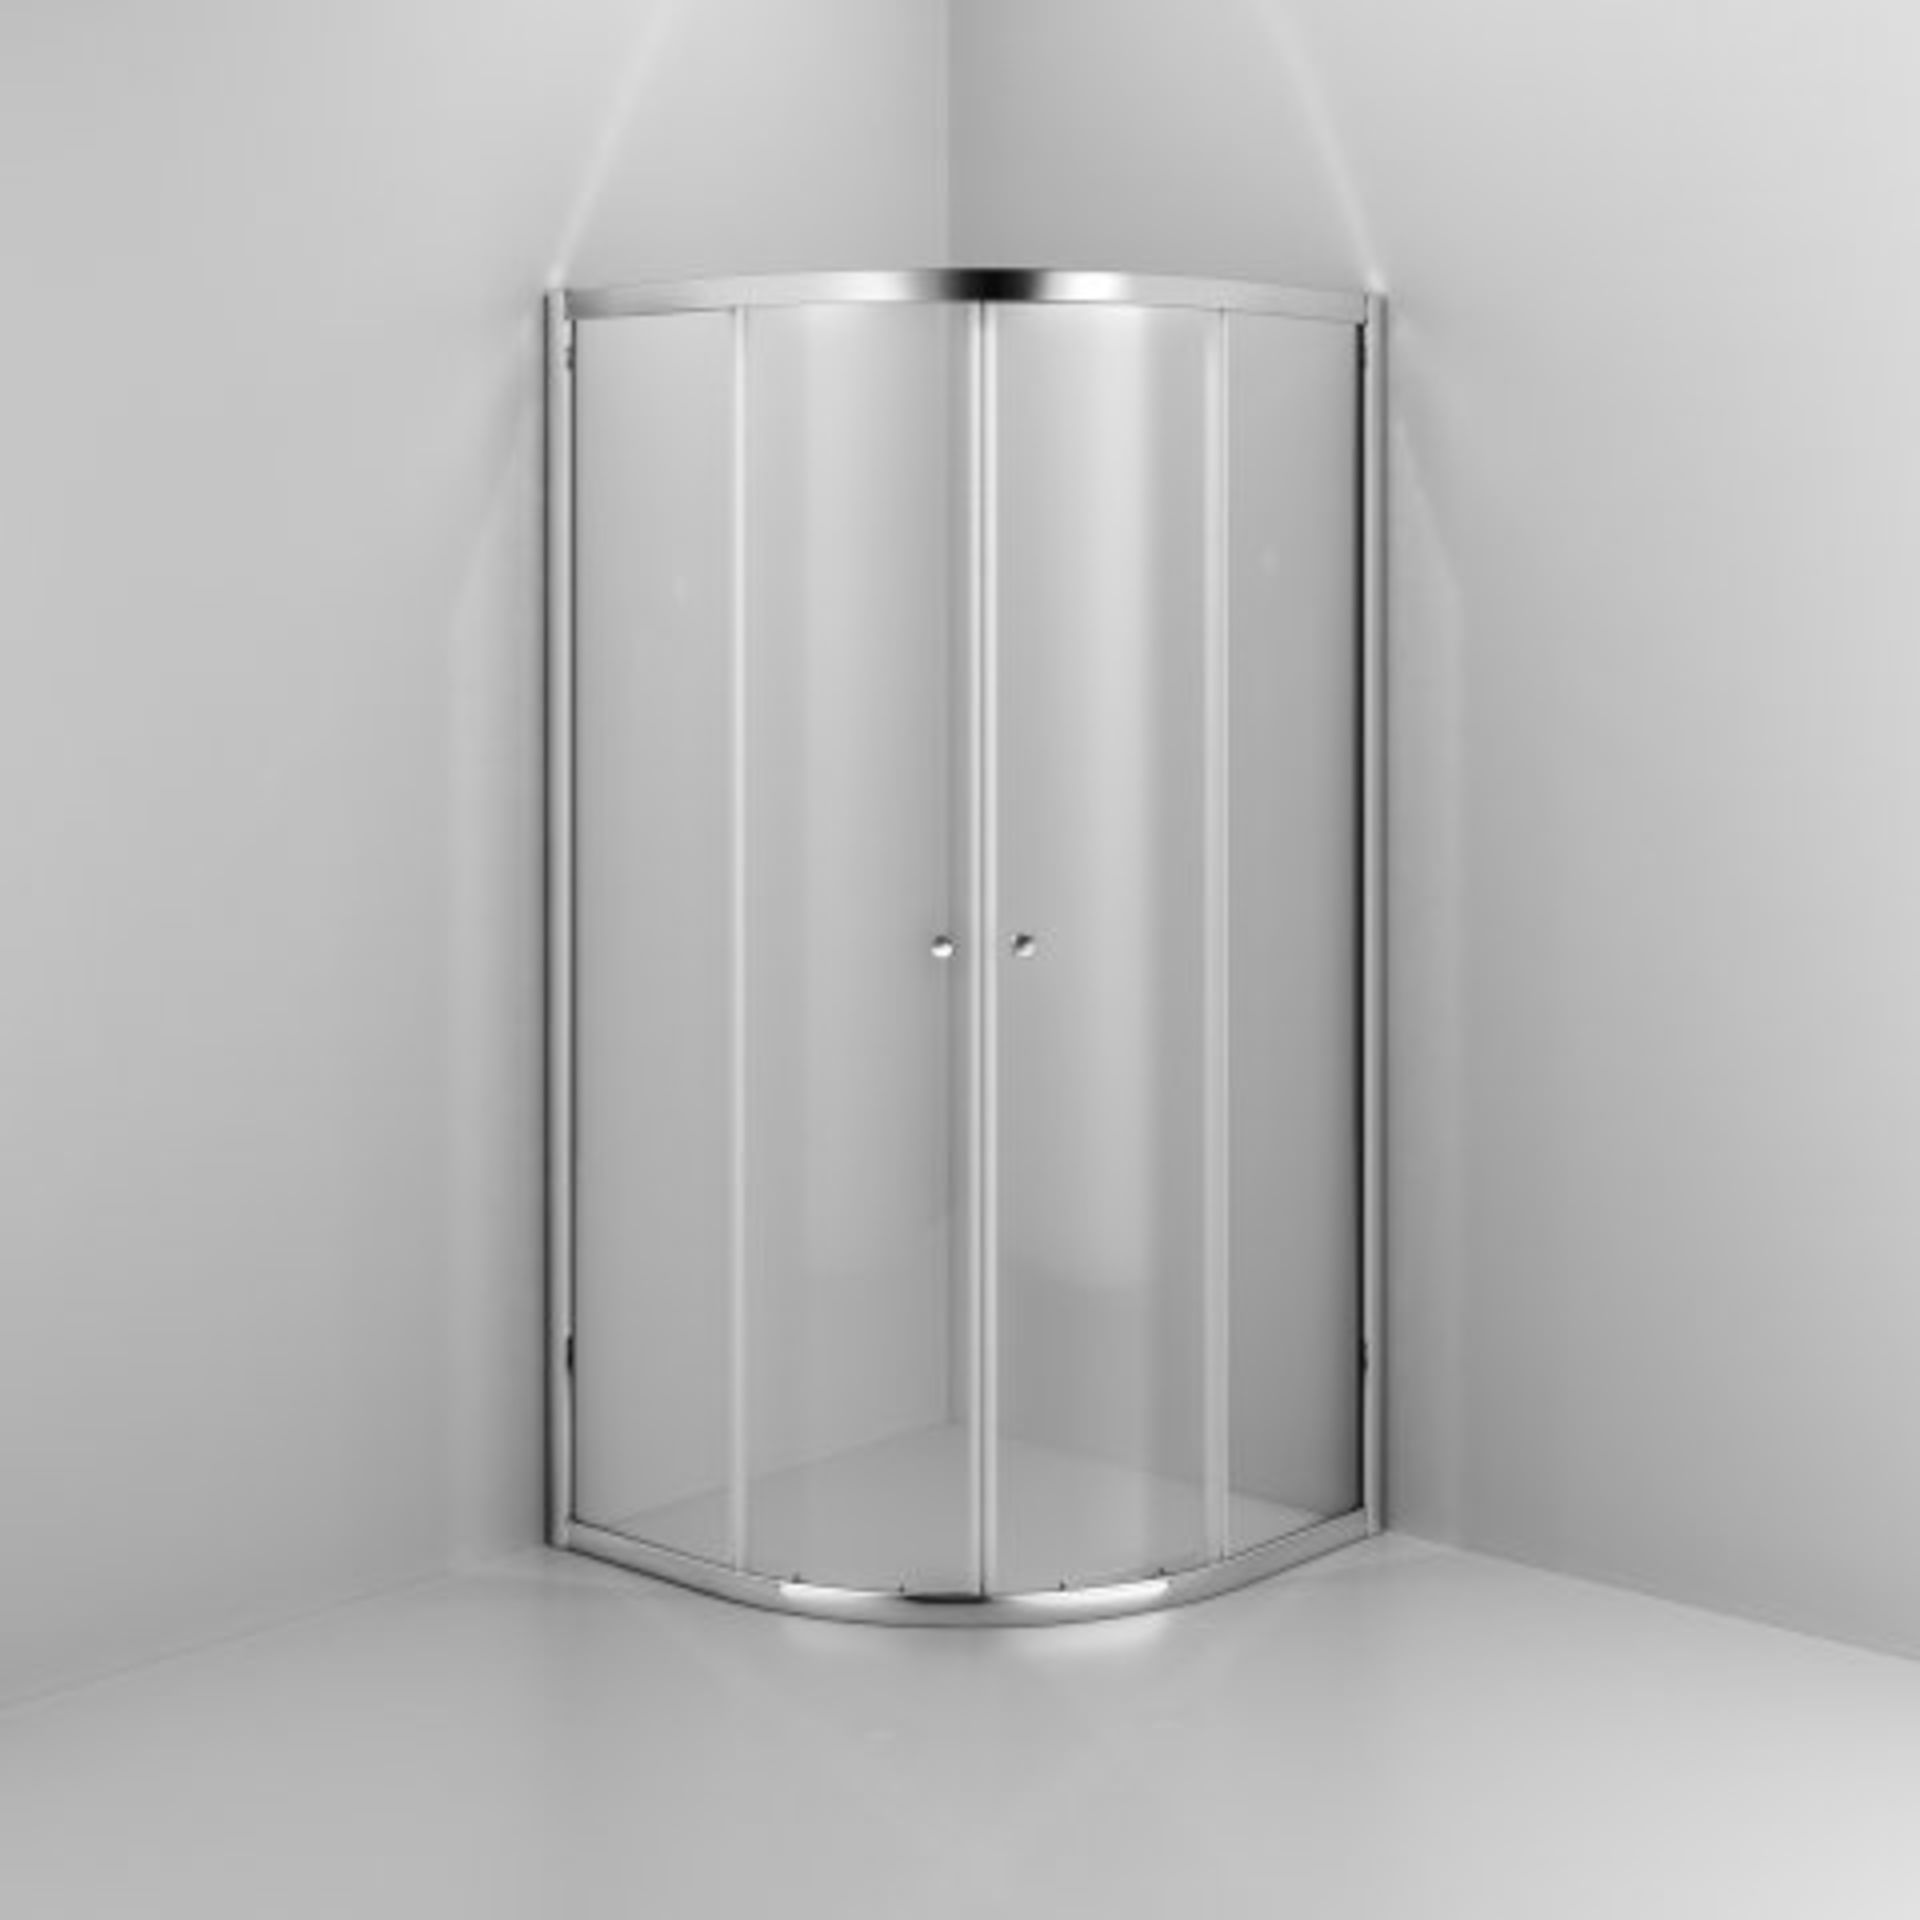 (P263) 900x900mm - Elements Quadrant Shower Enclosure. RRP £299.99. Budget Solution Our entry - Image 5 of 5